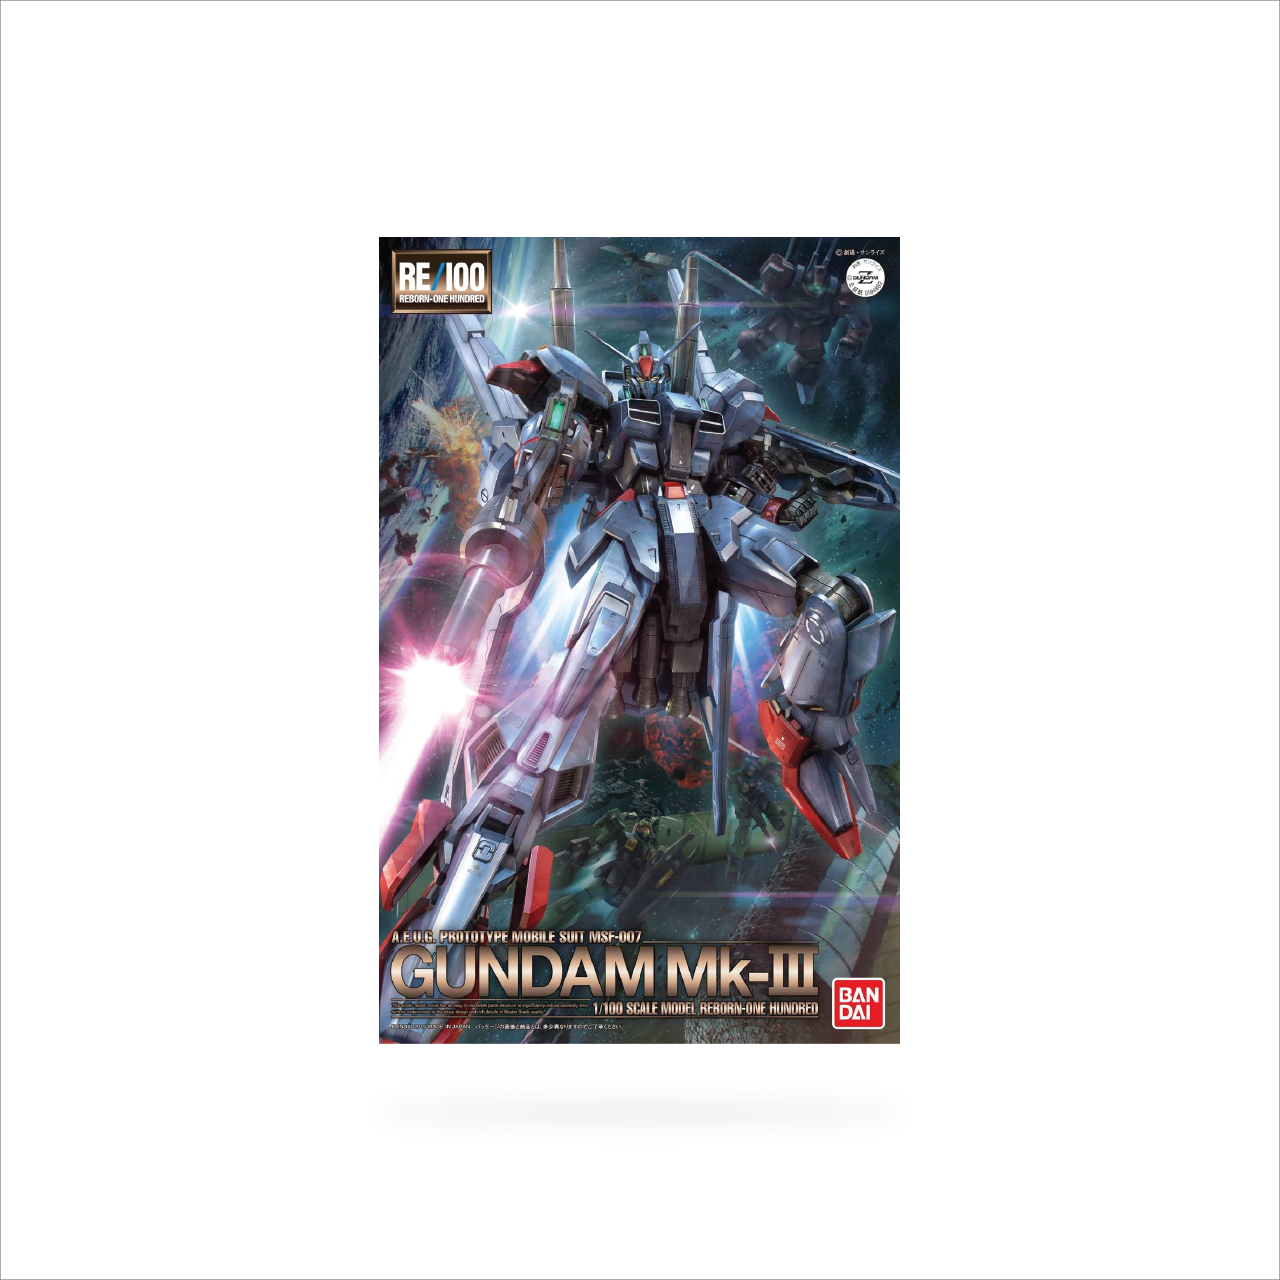 Gundam Mk-III (RE/100)